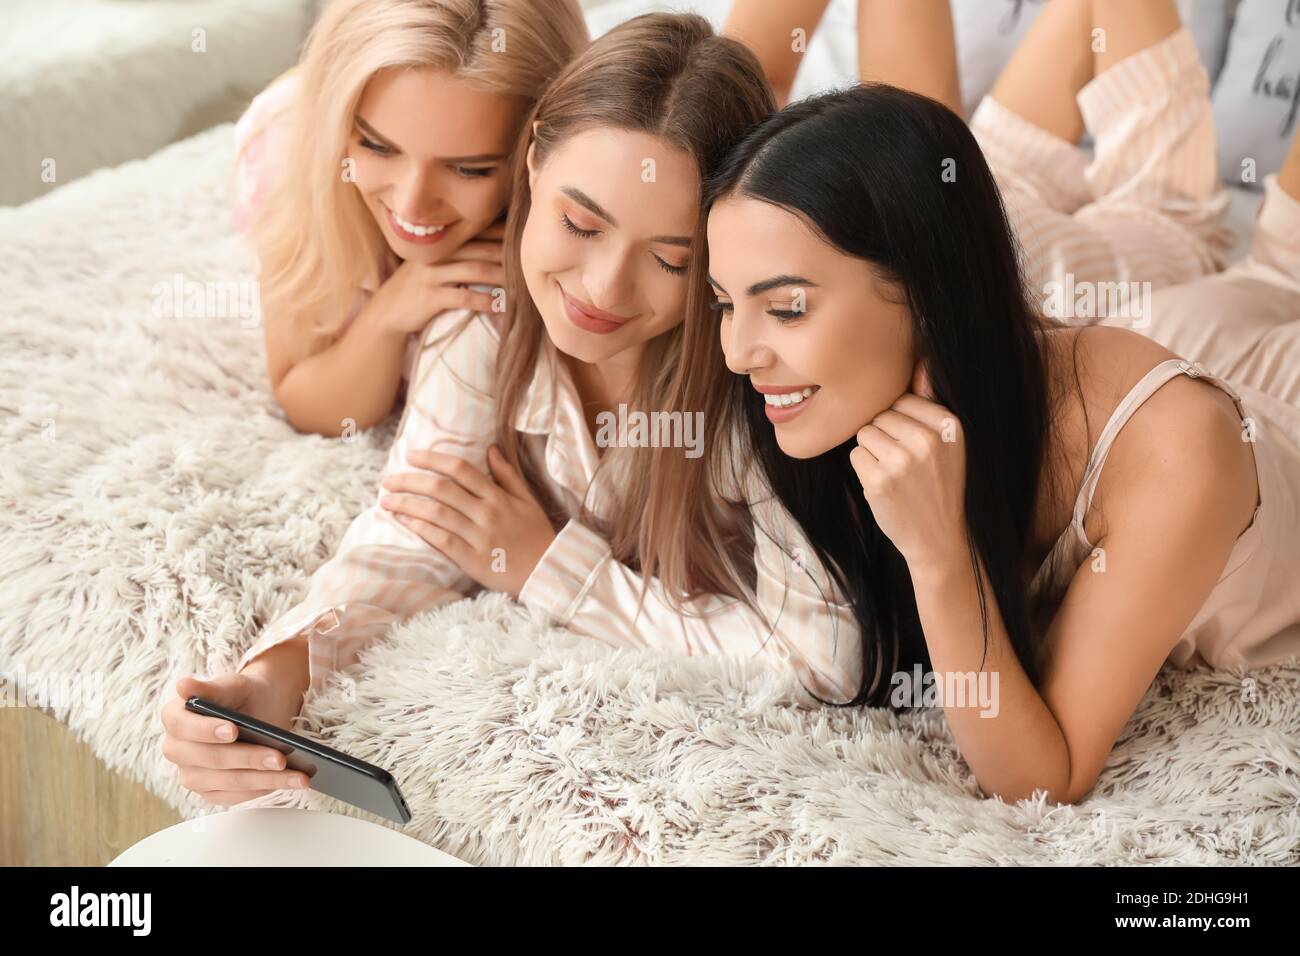 Beautiful young women taking selfie at slumber party Stock Photo